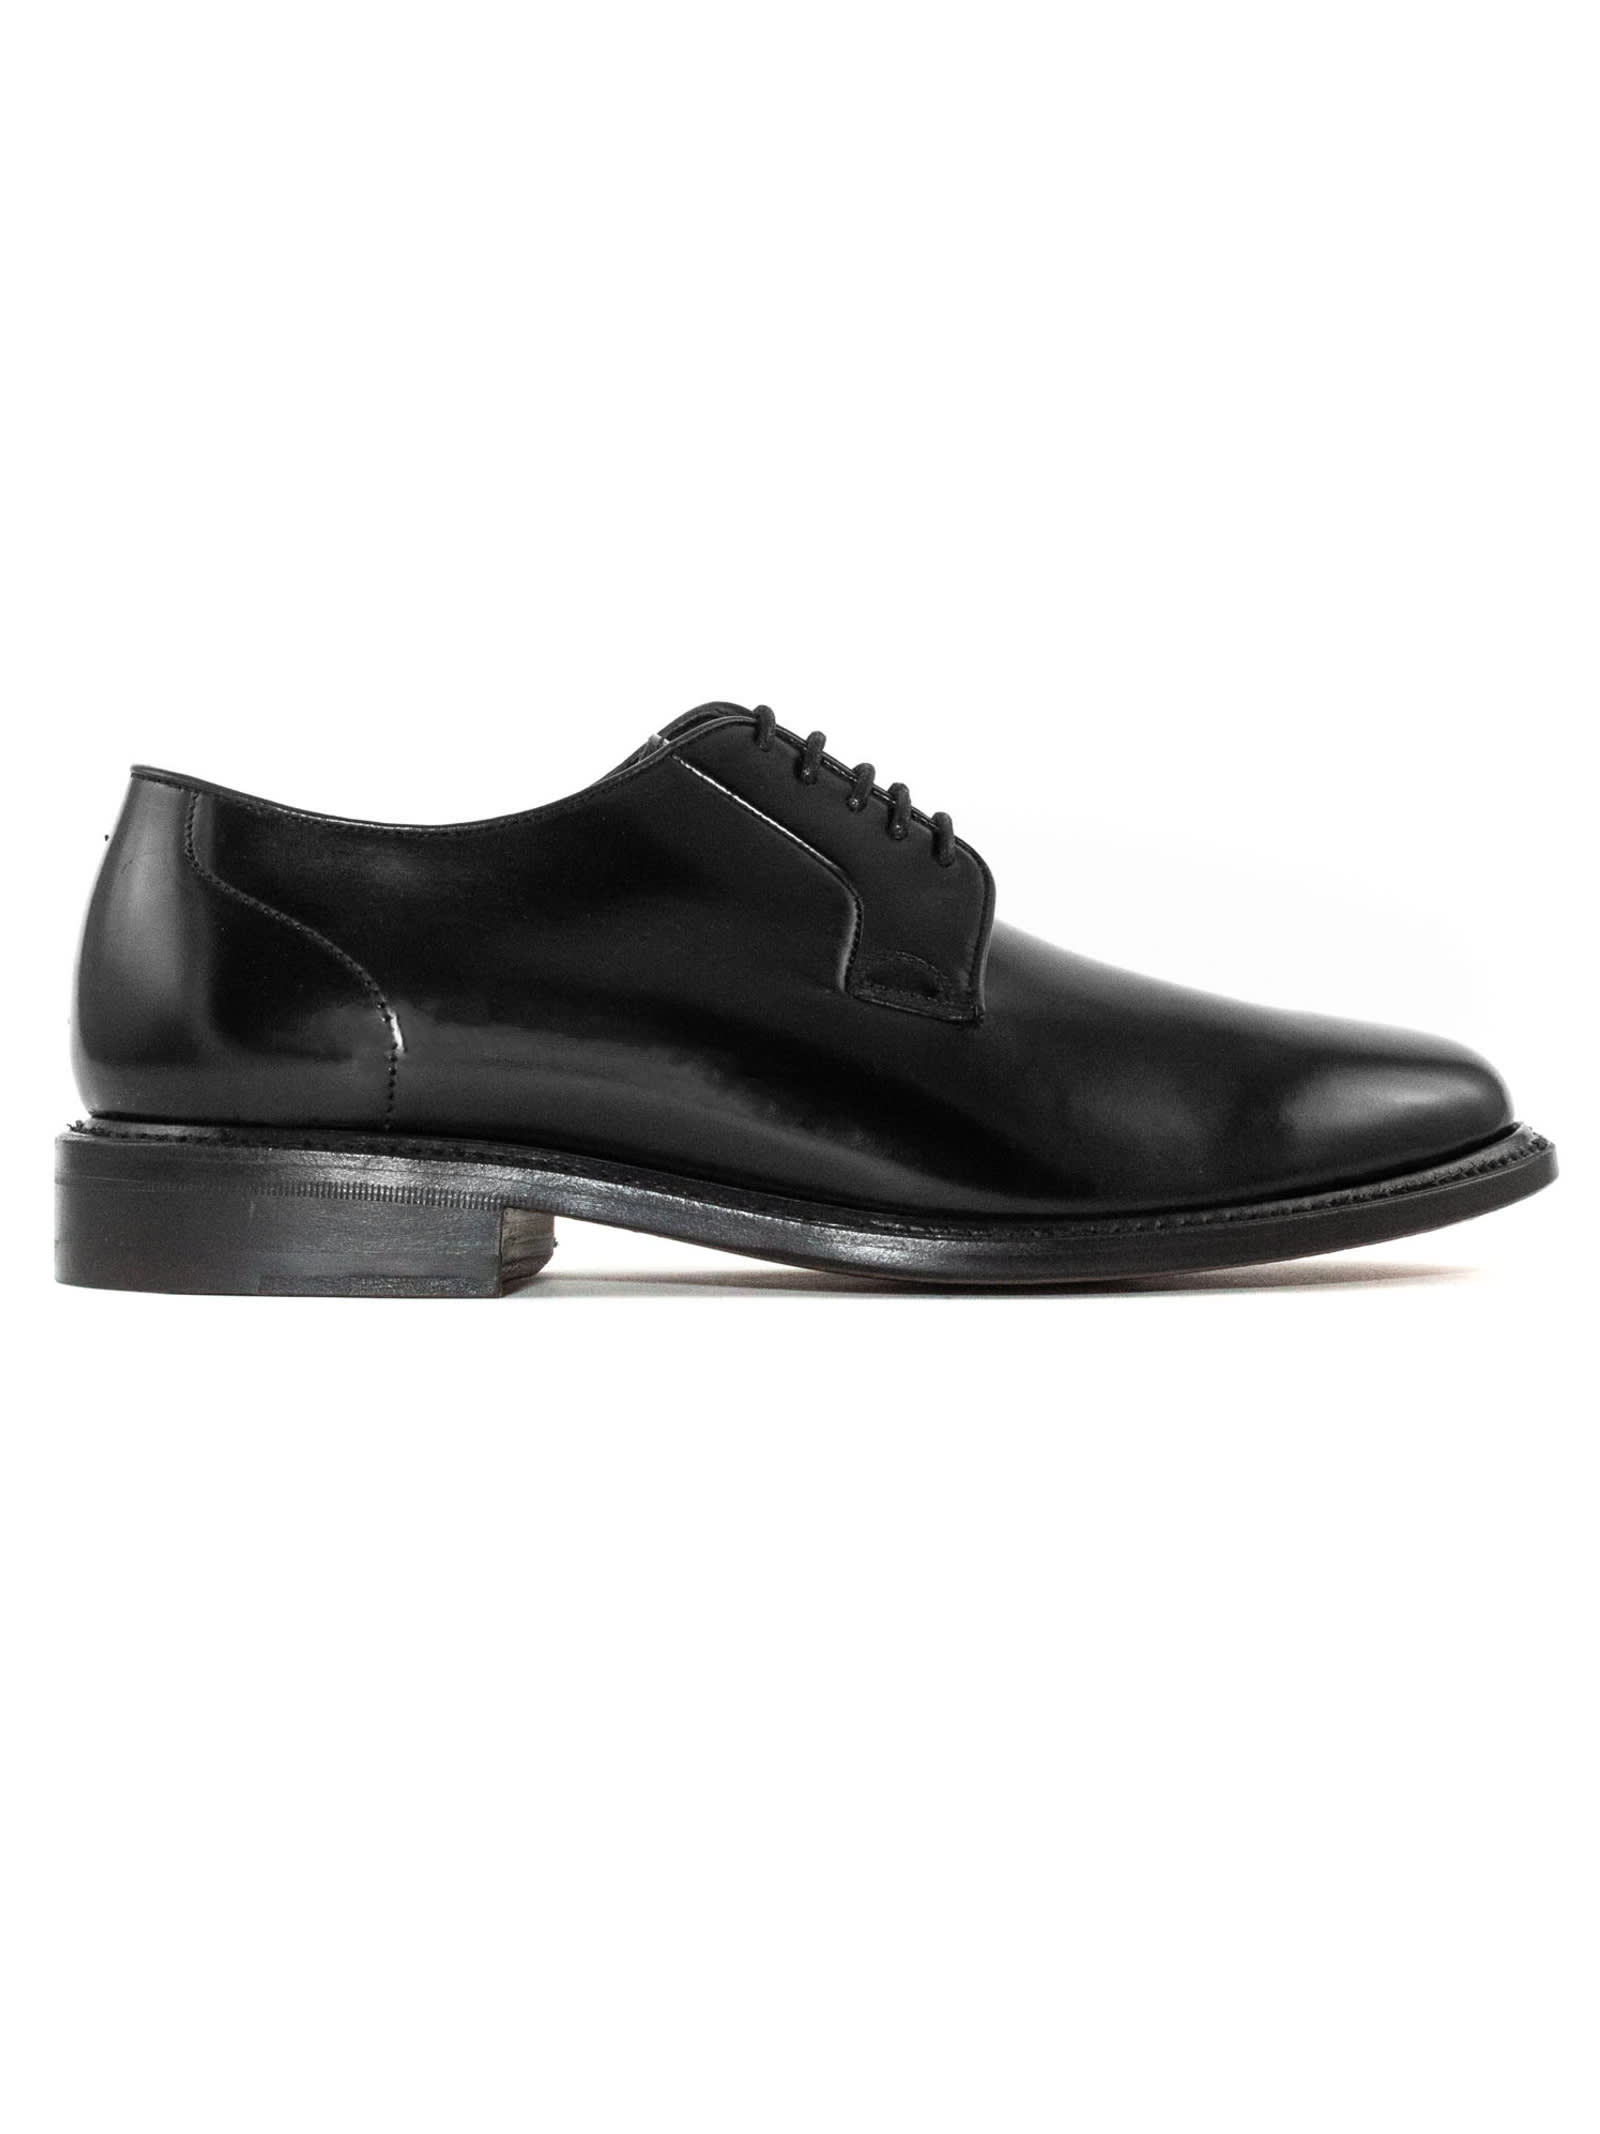 Berwick 1707 Black Leather Derby Shoes